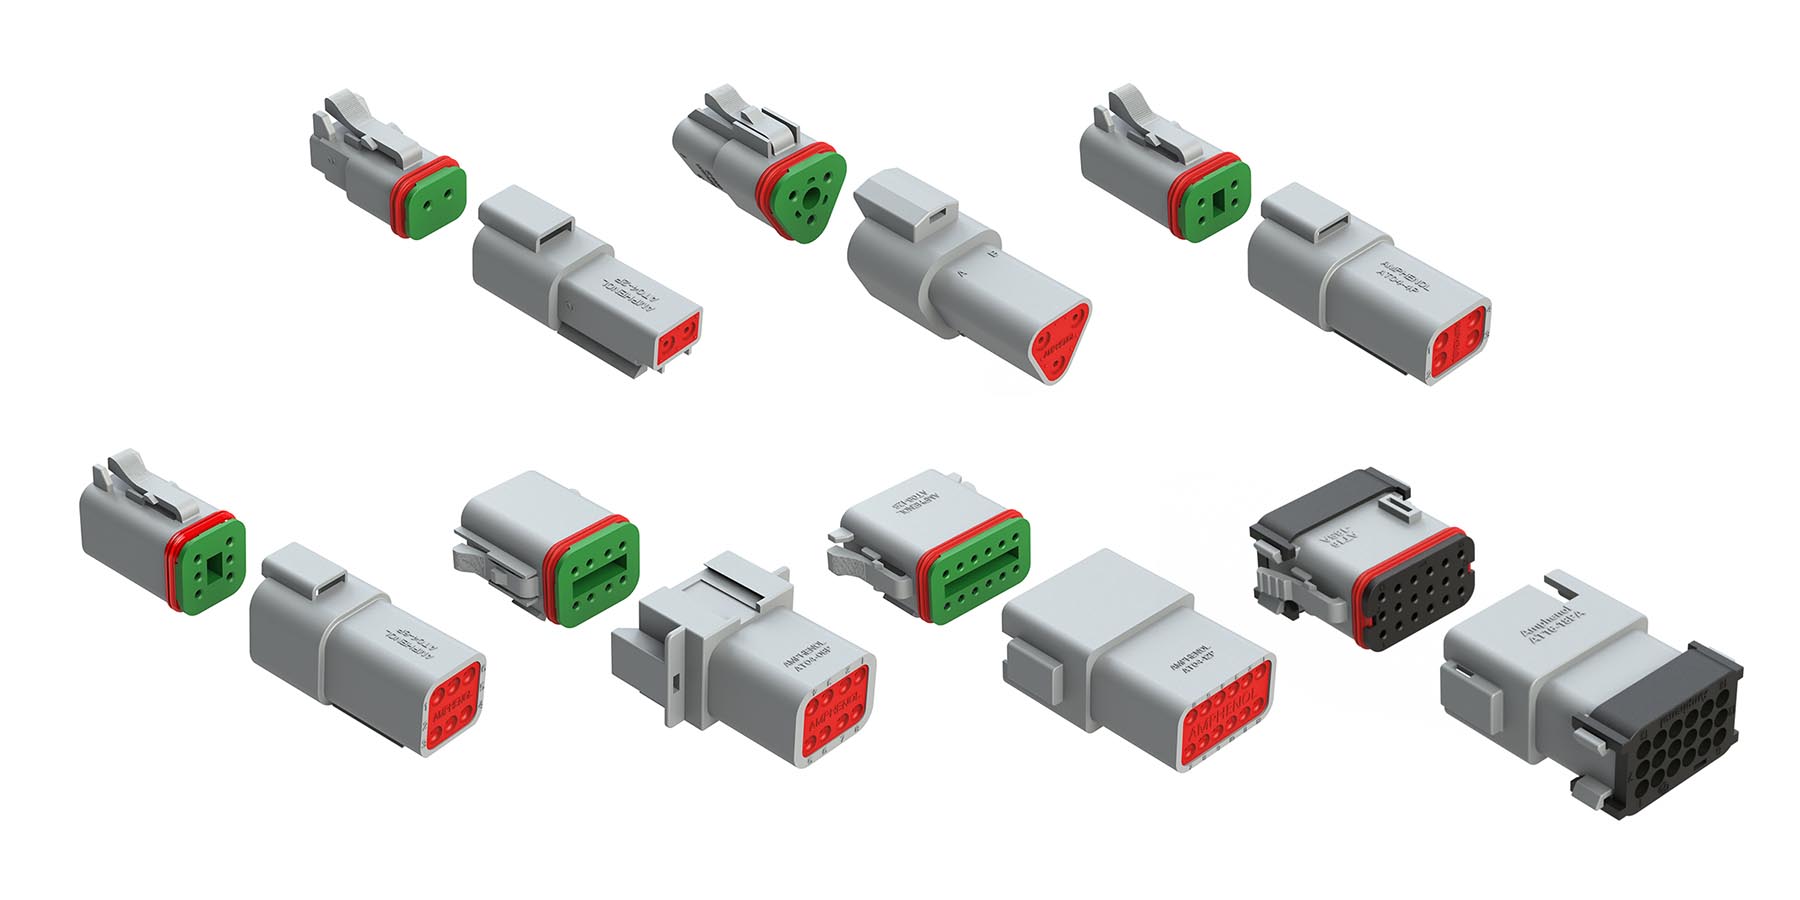 WAYTEK supplies Amphenol Sine Systems’ AT Series marine connectors